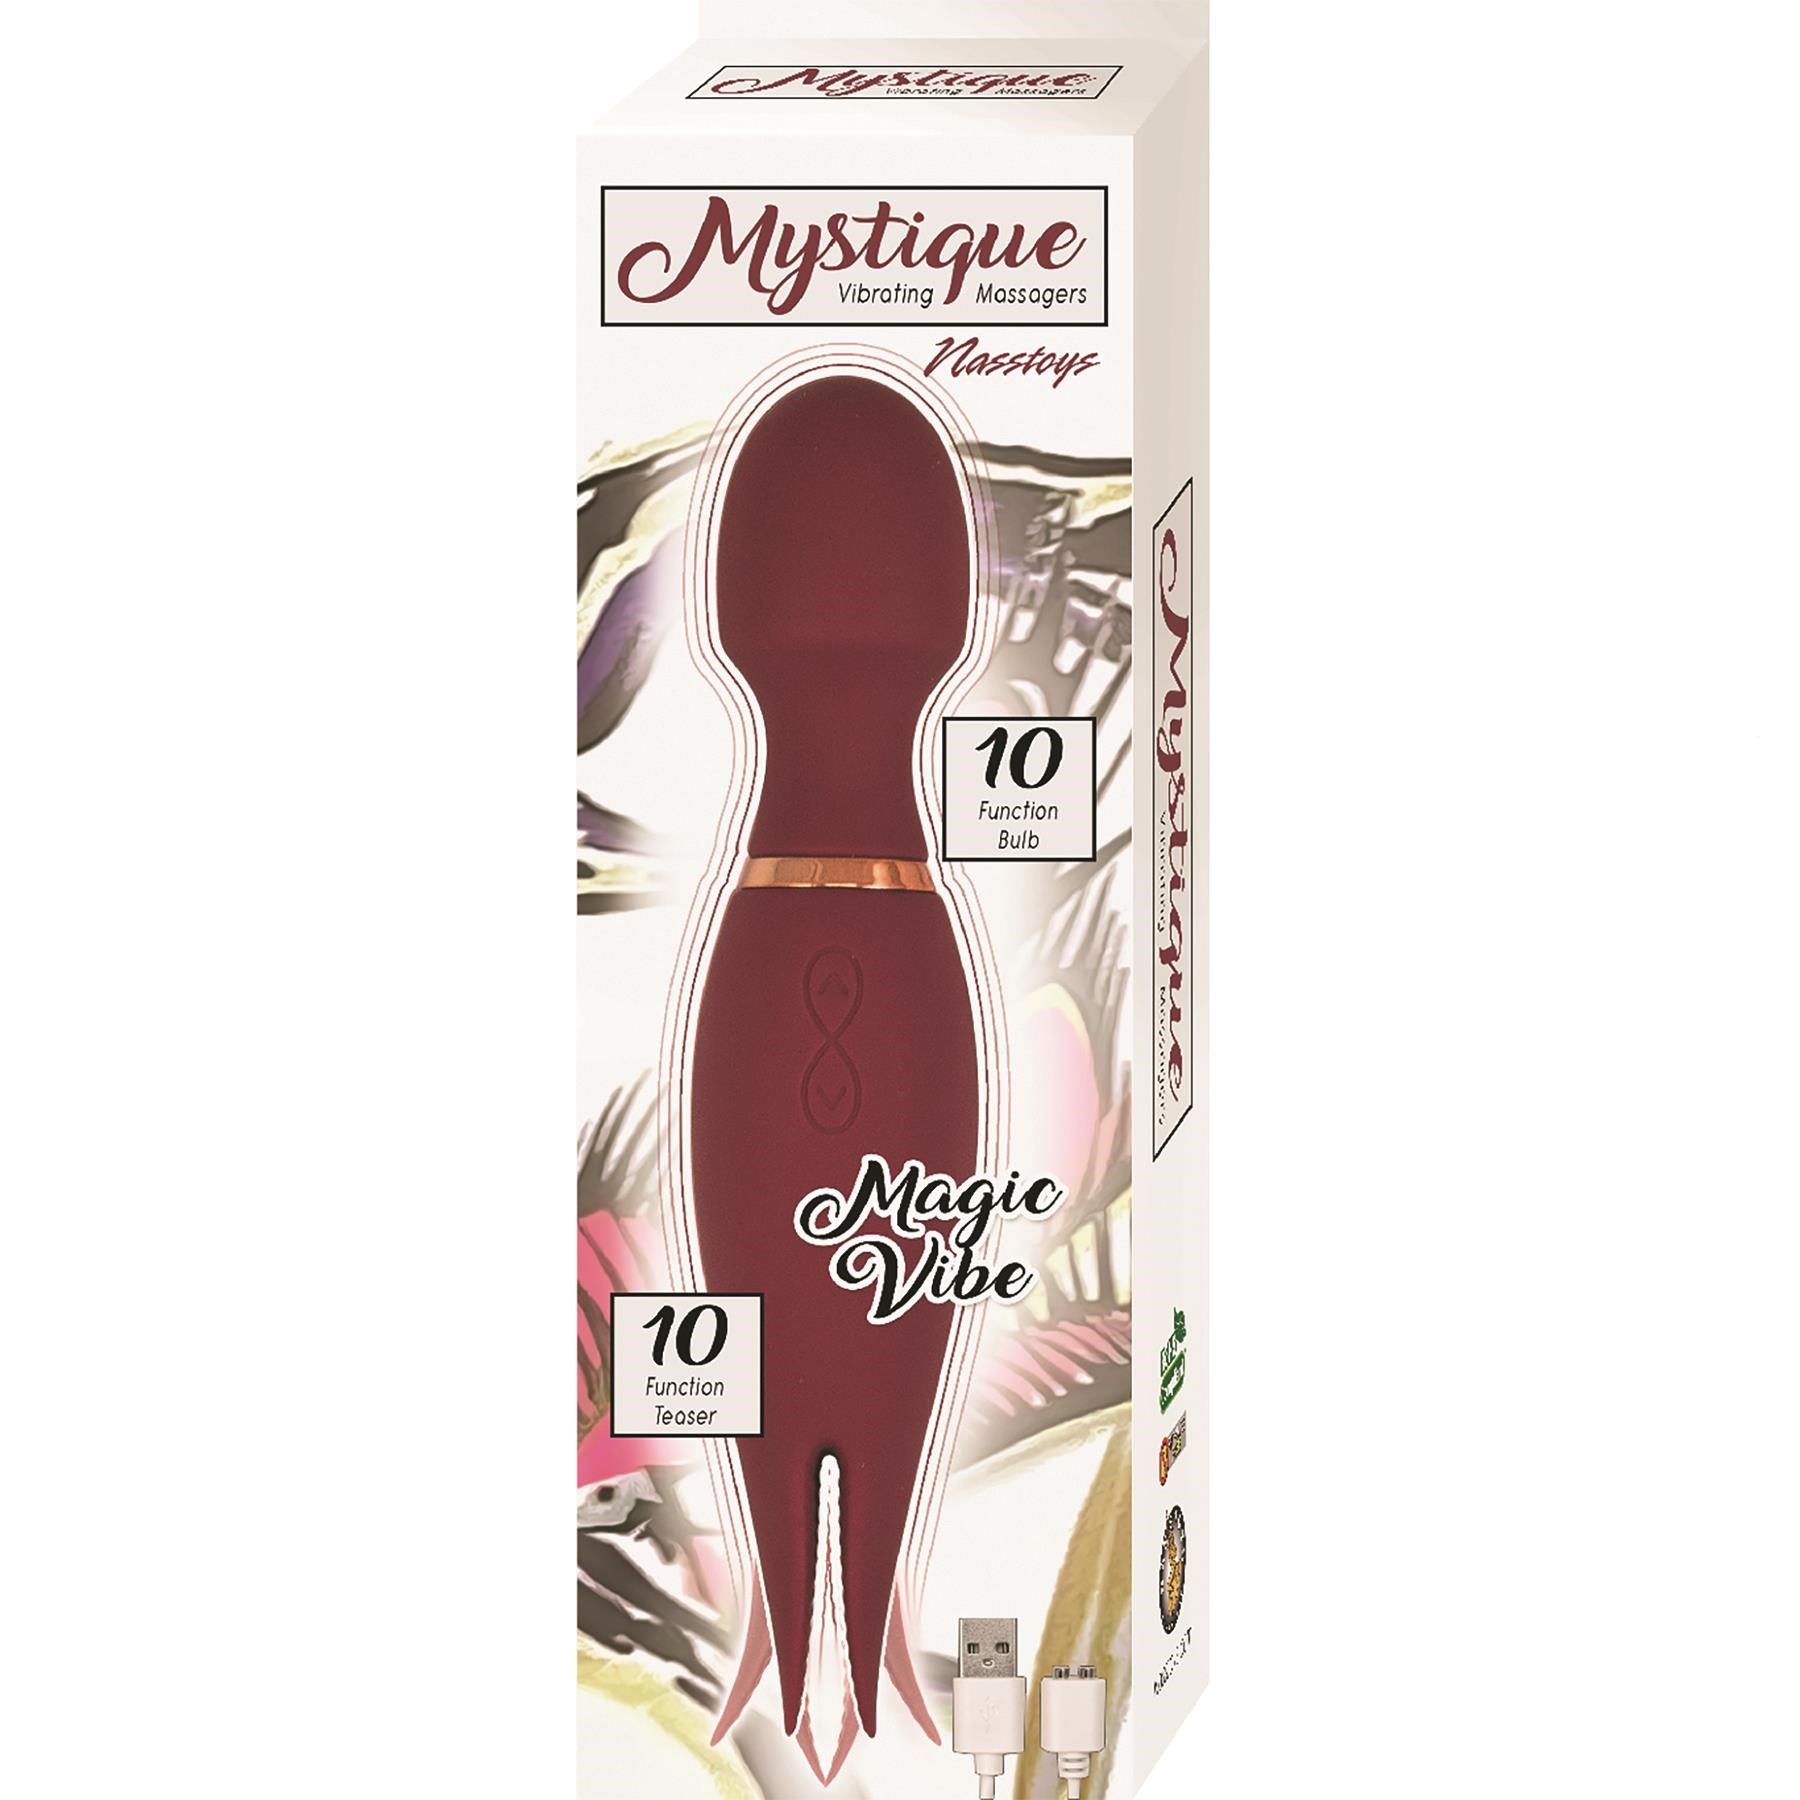 Mystique Magic Vibe Wand Massager - Packaging